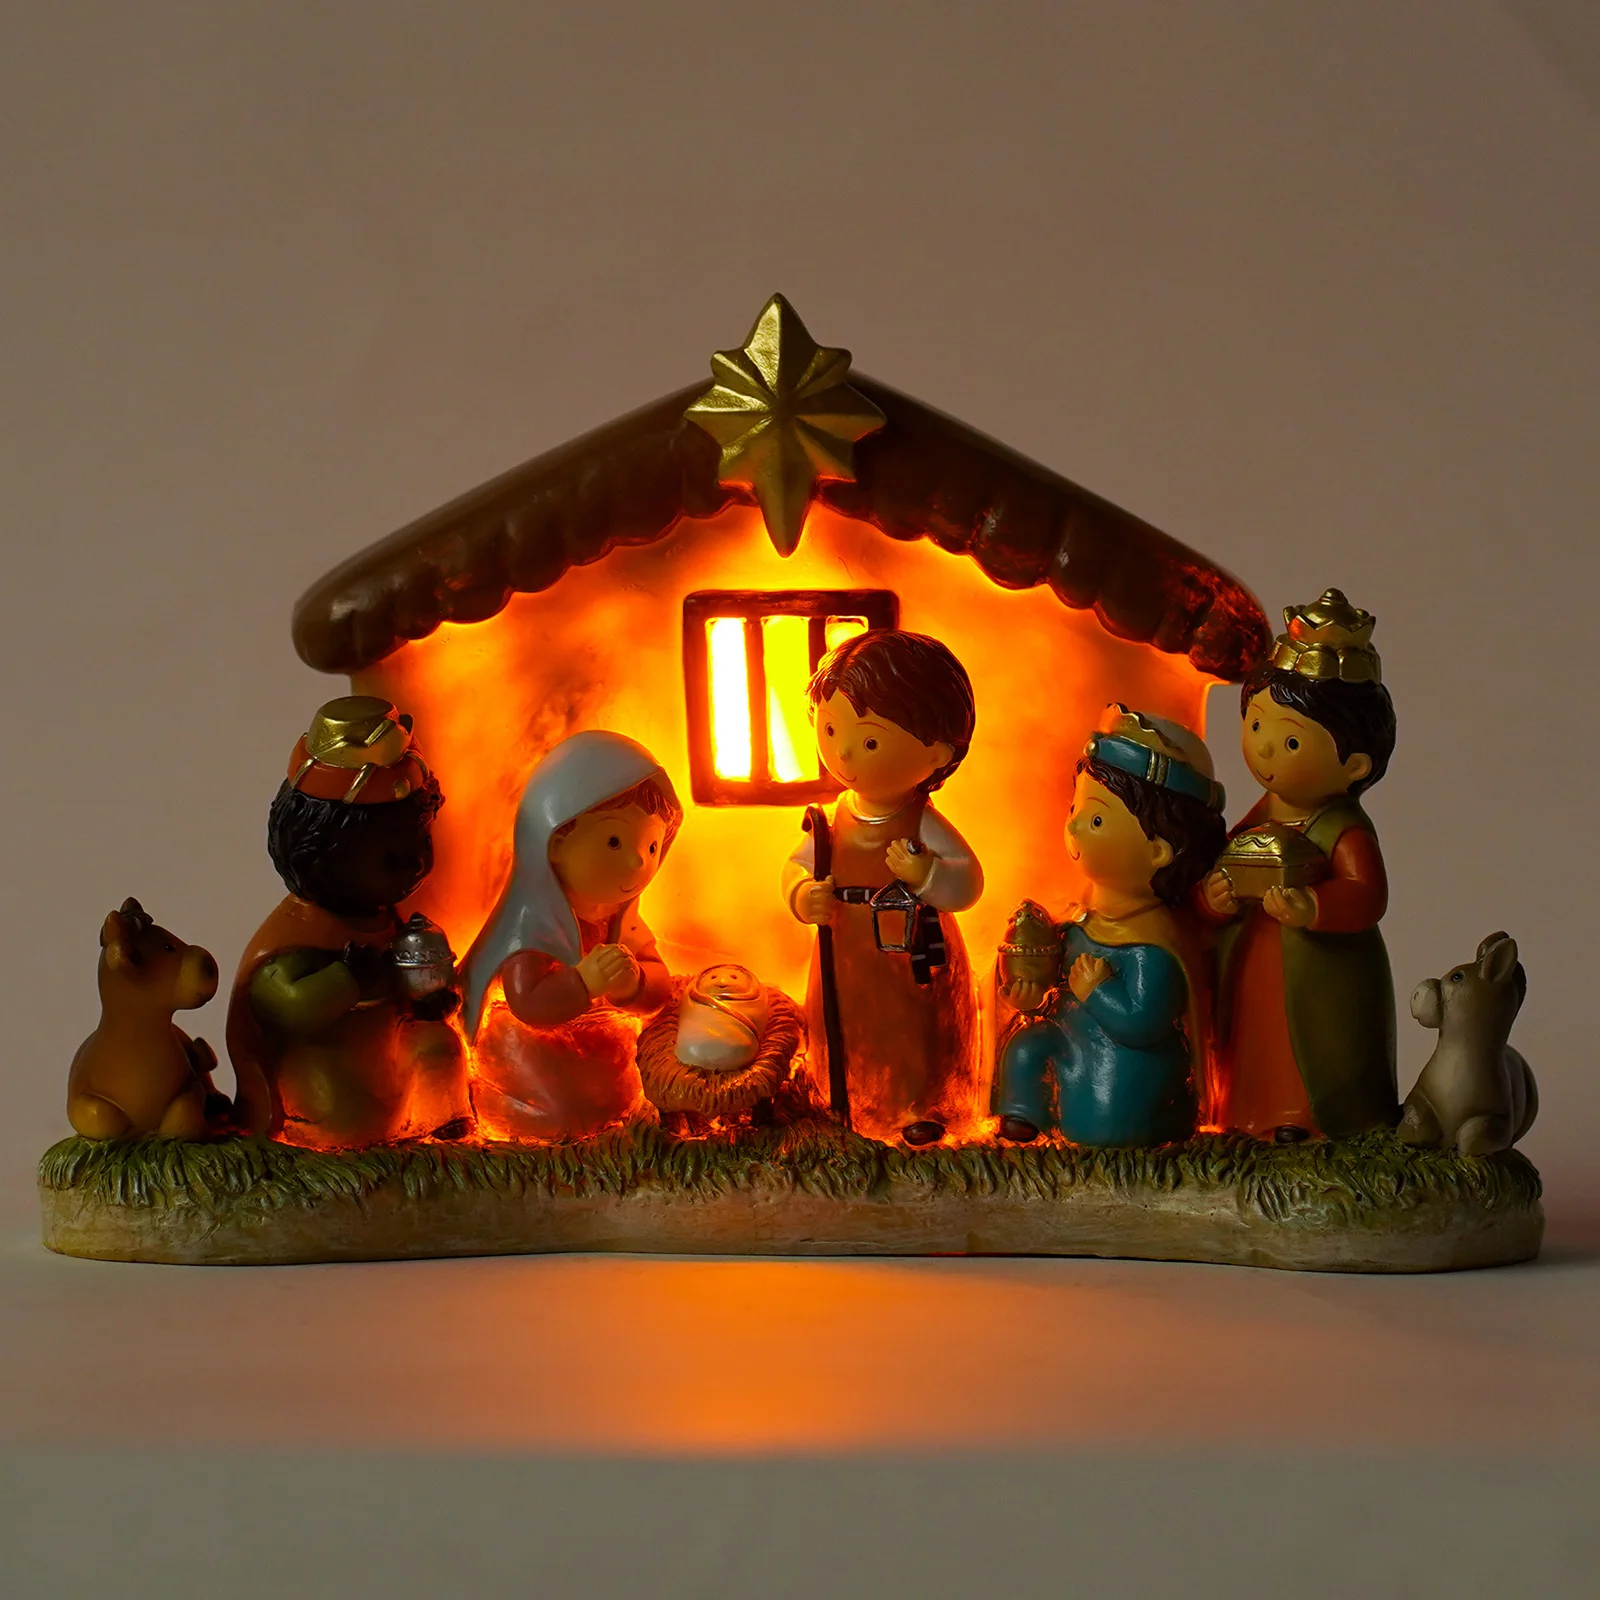 

Baby Jesus Manger Christmas Crib Figurines Nativity Scene Set Statue Miniatures Ornament Church Xmas Gift Home Decoration